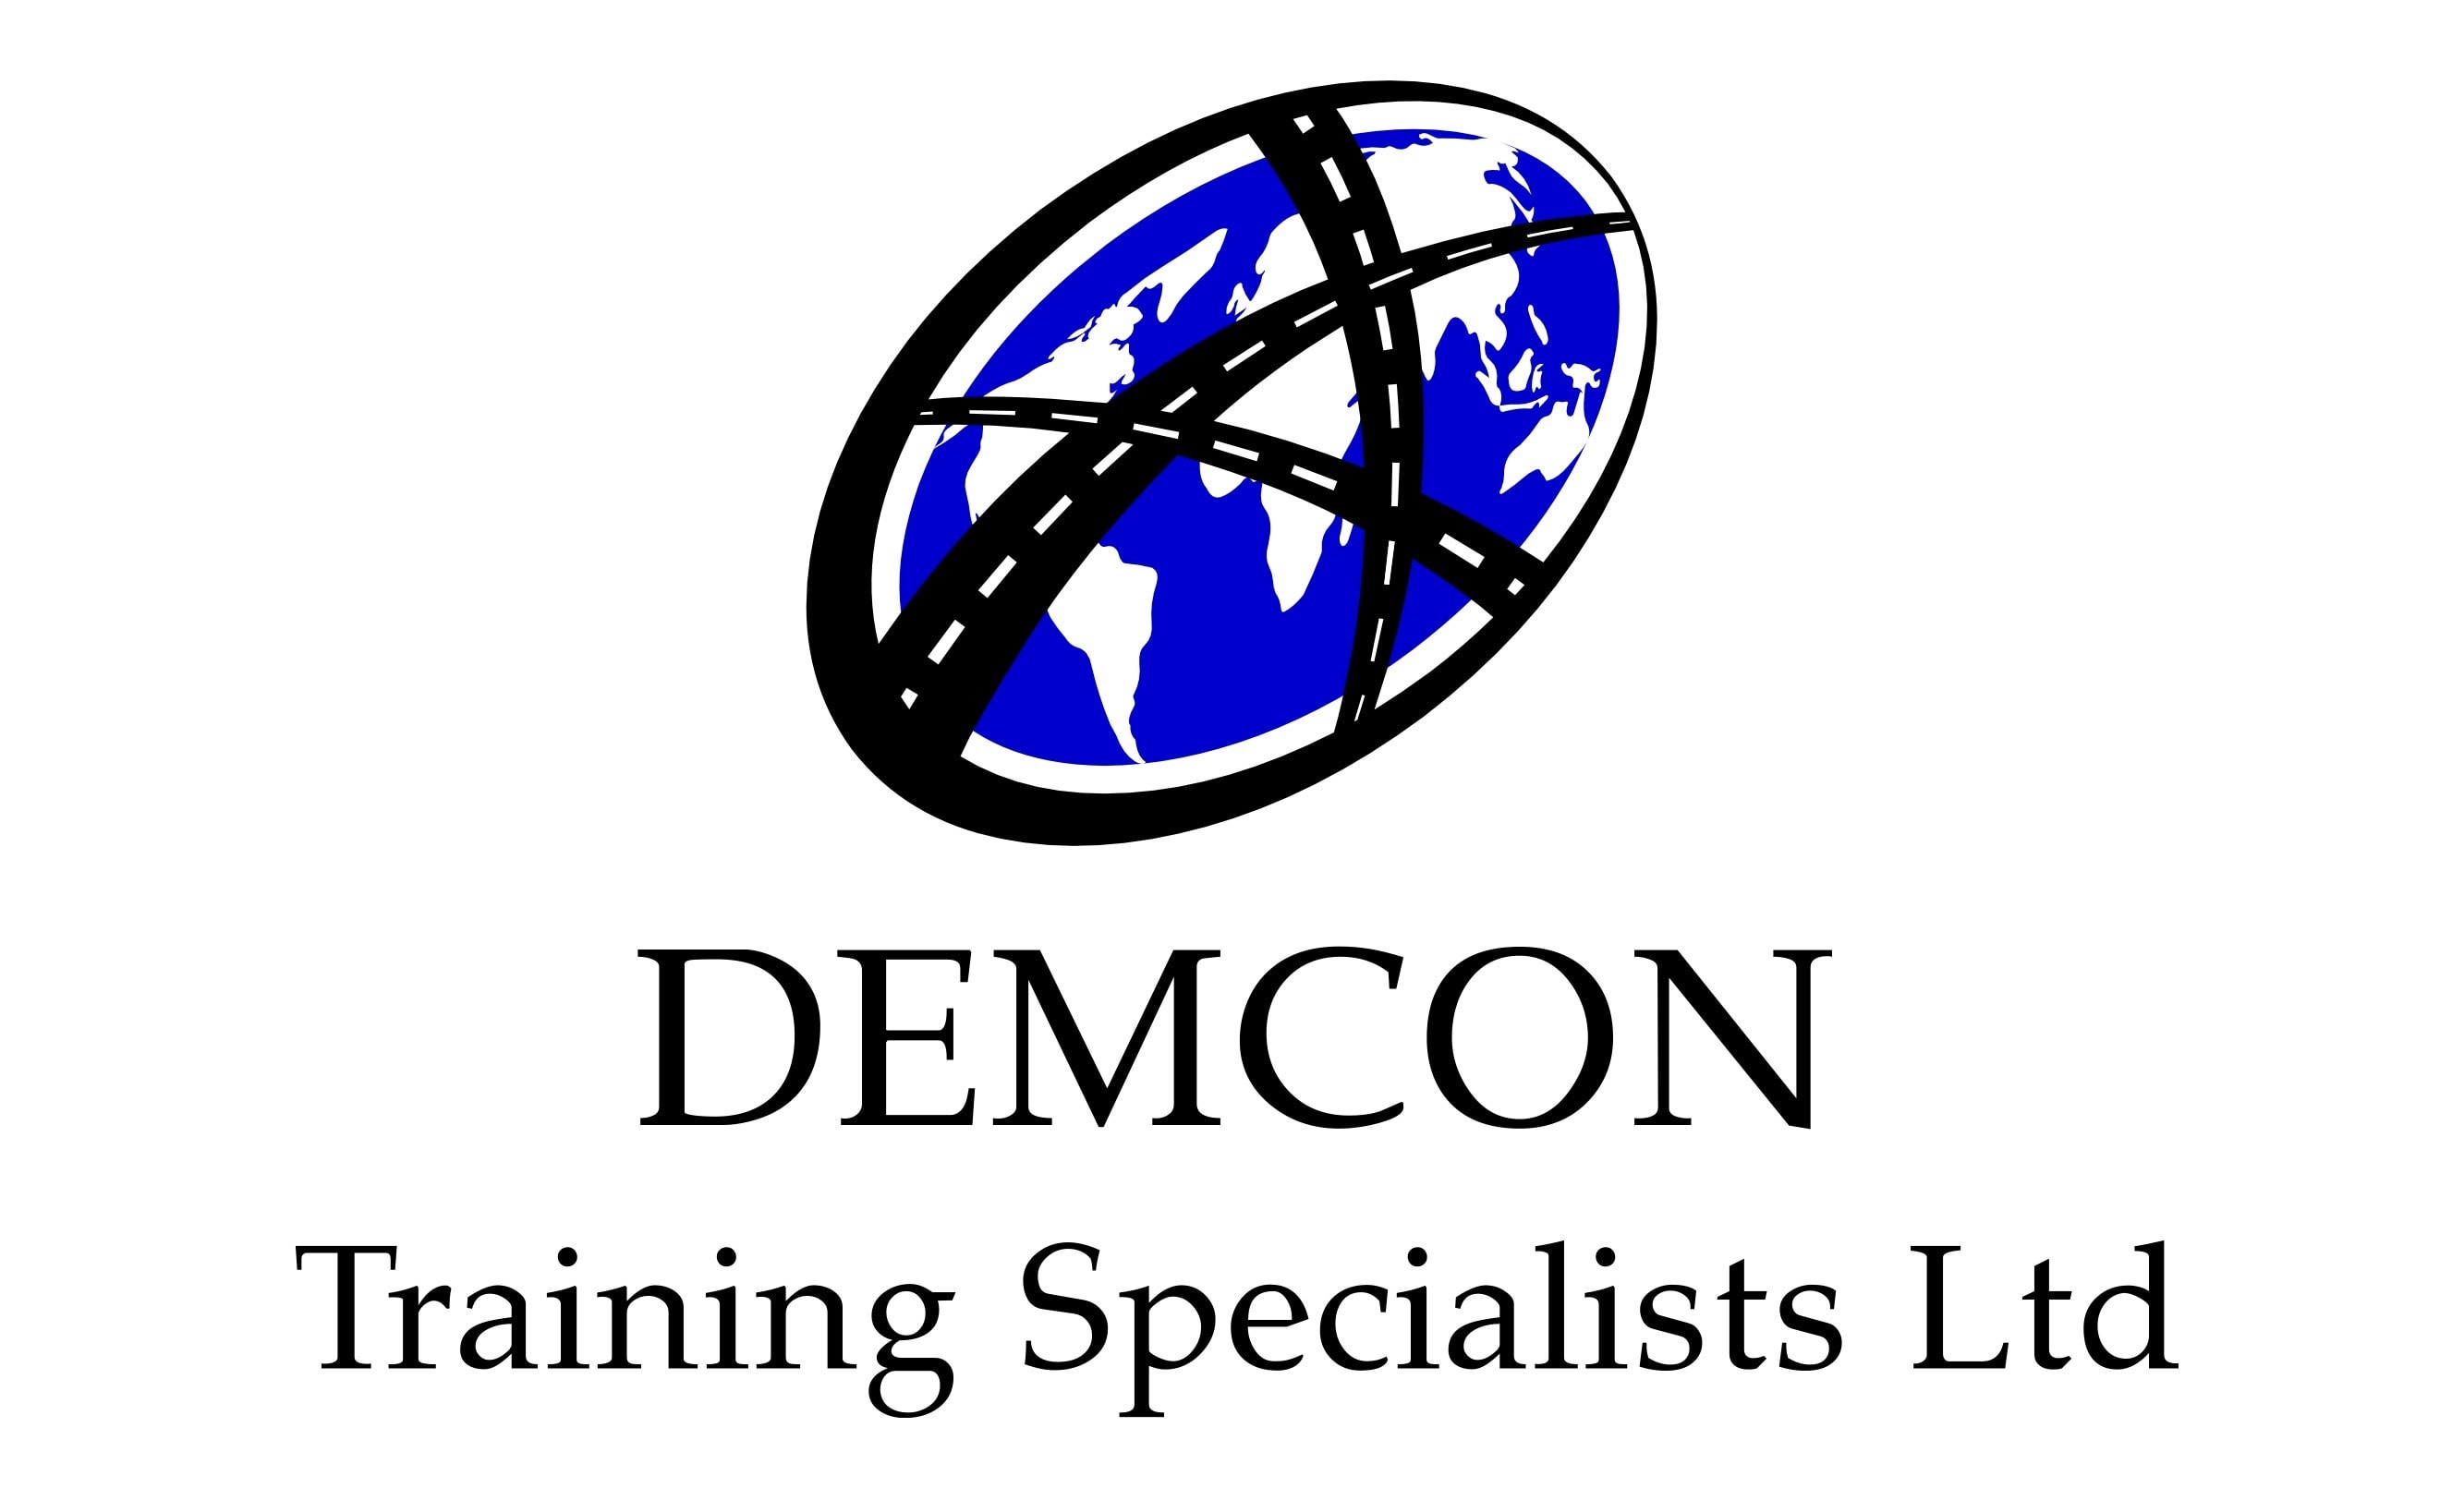 Demcom Training Specialists Ltd